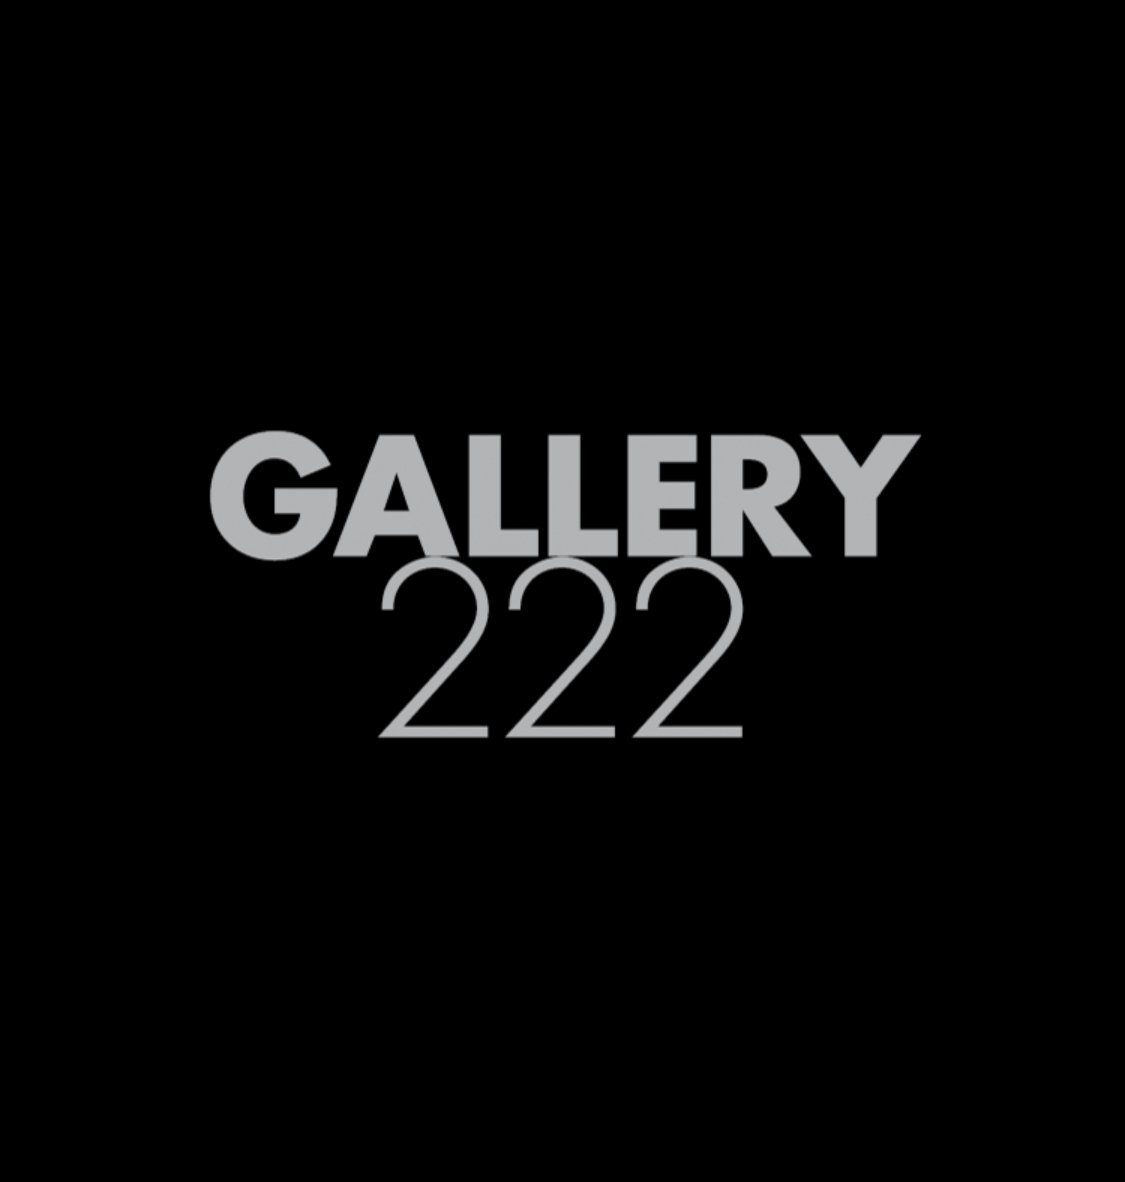 Gallery222 